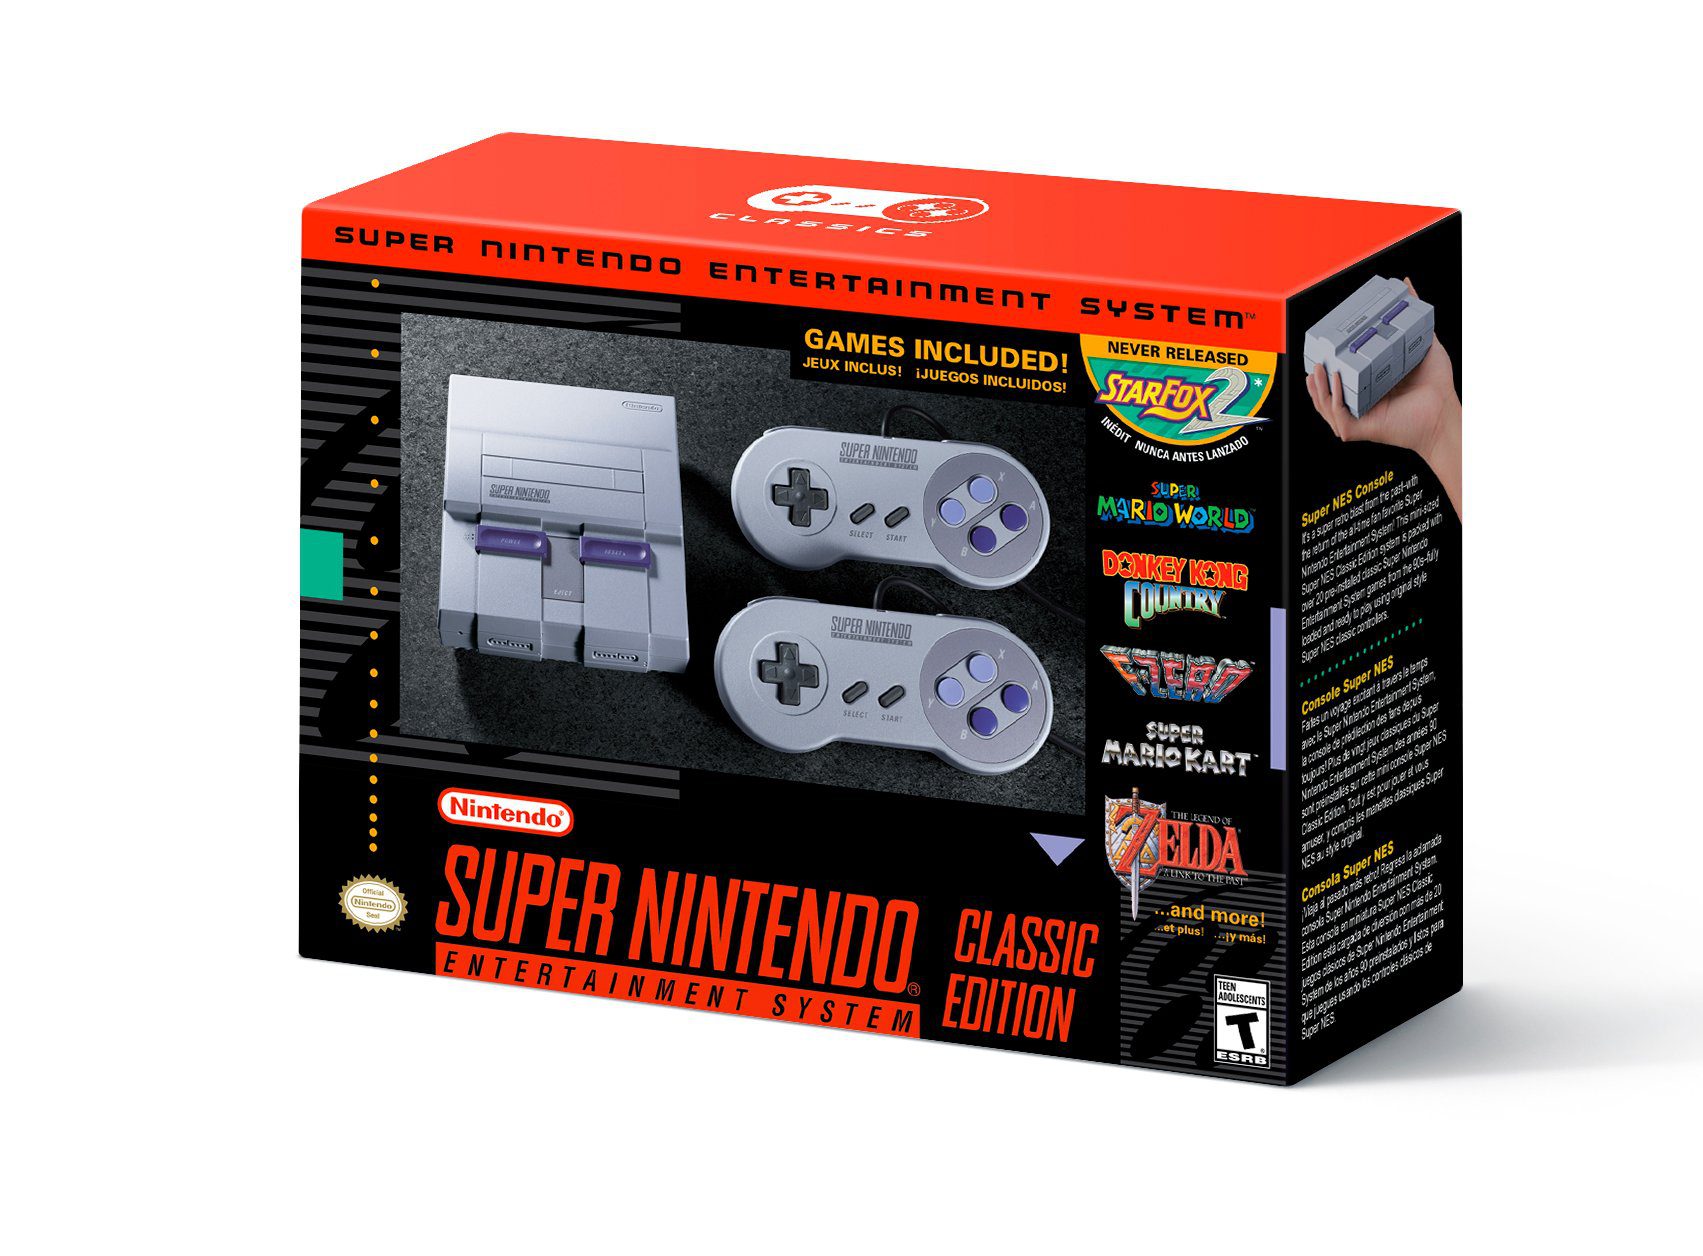 Nintendo Officially Announces the SNES Classic